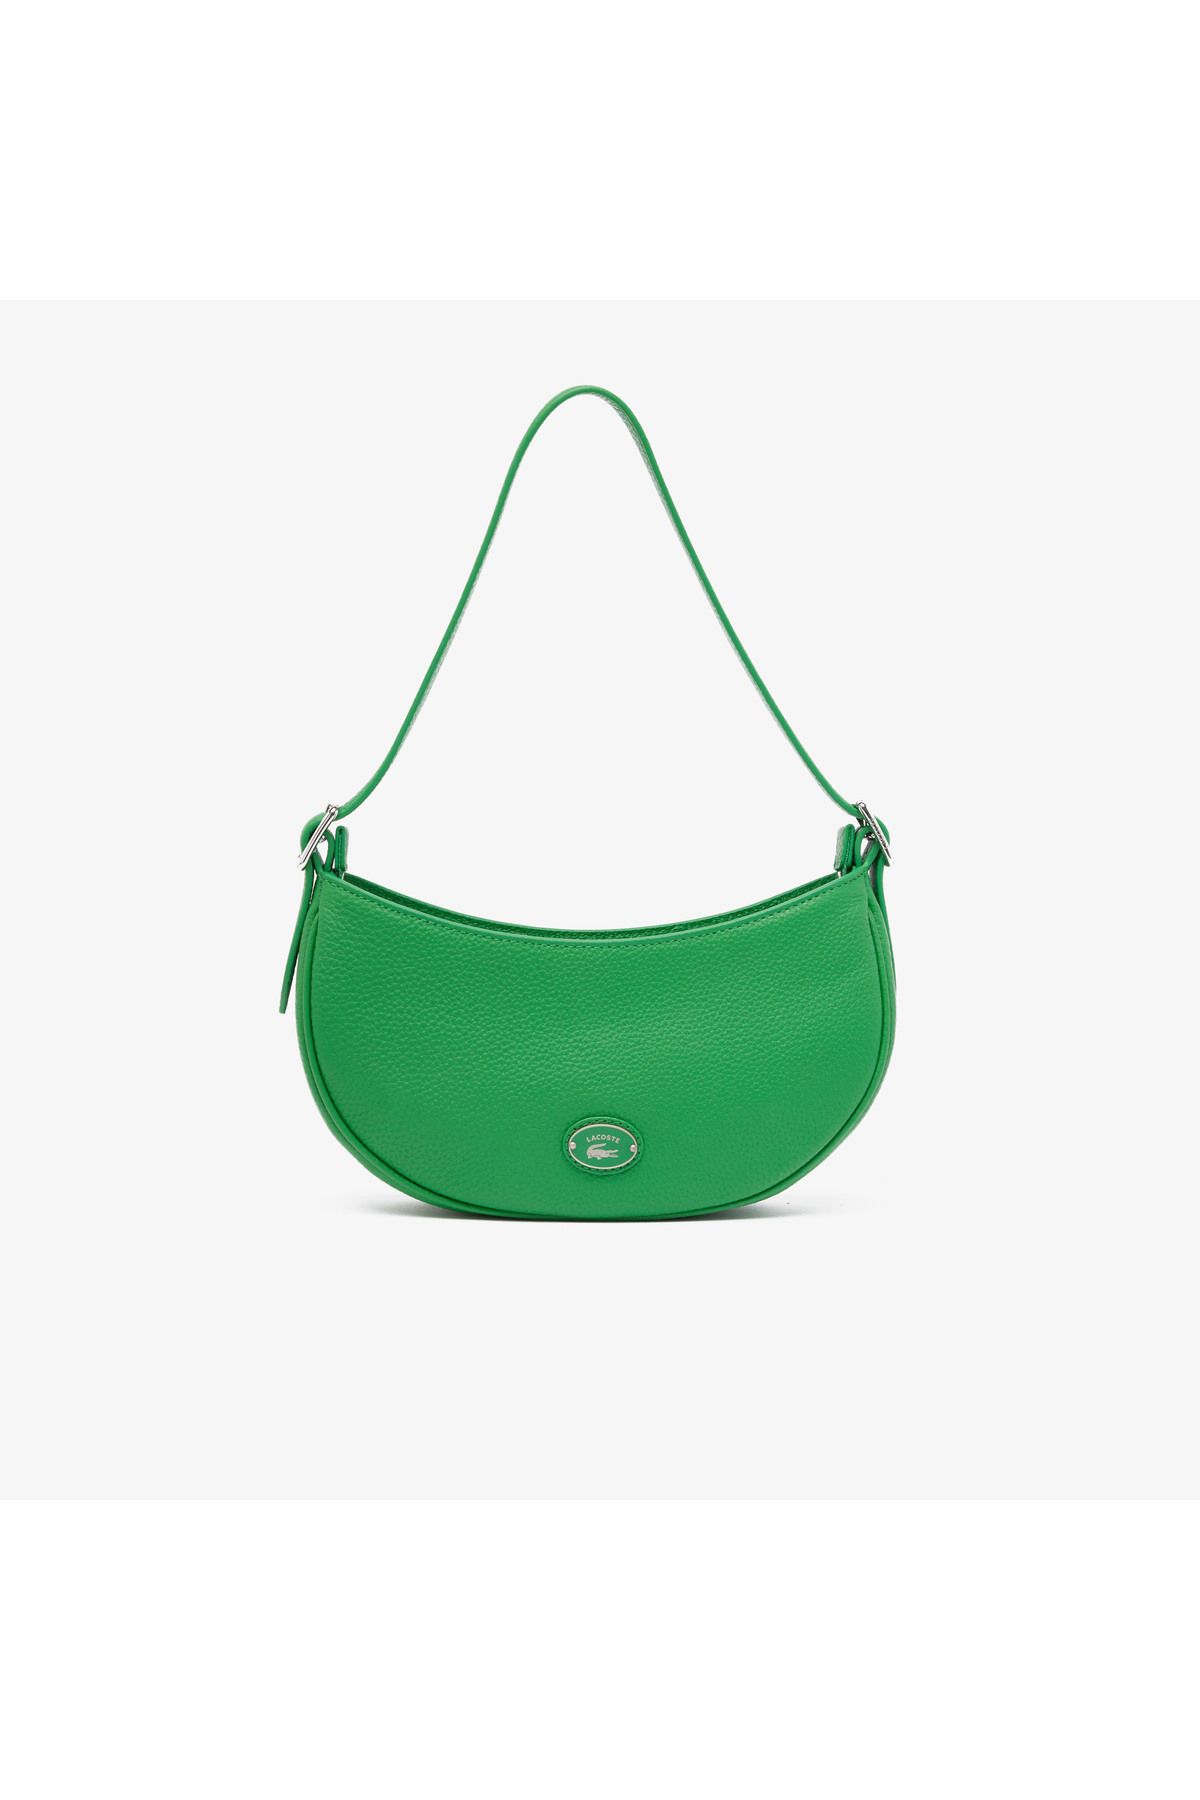 Lacoste کیف شانه سبز زن